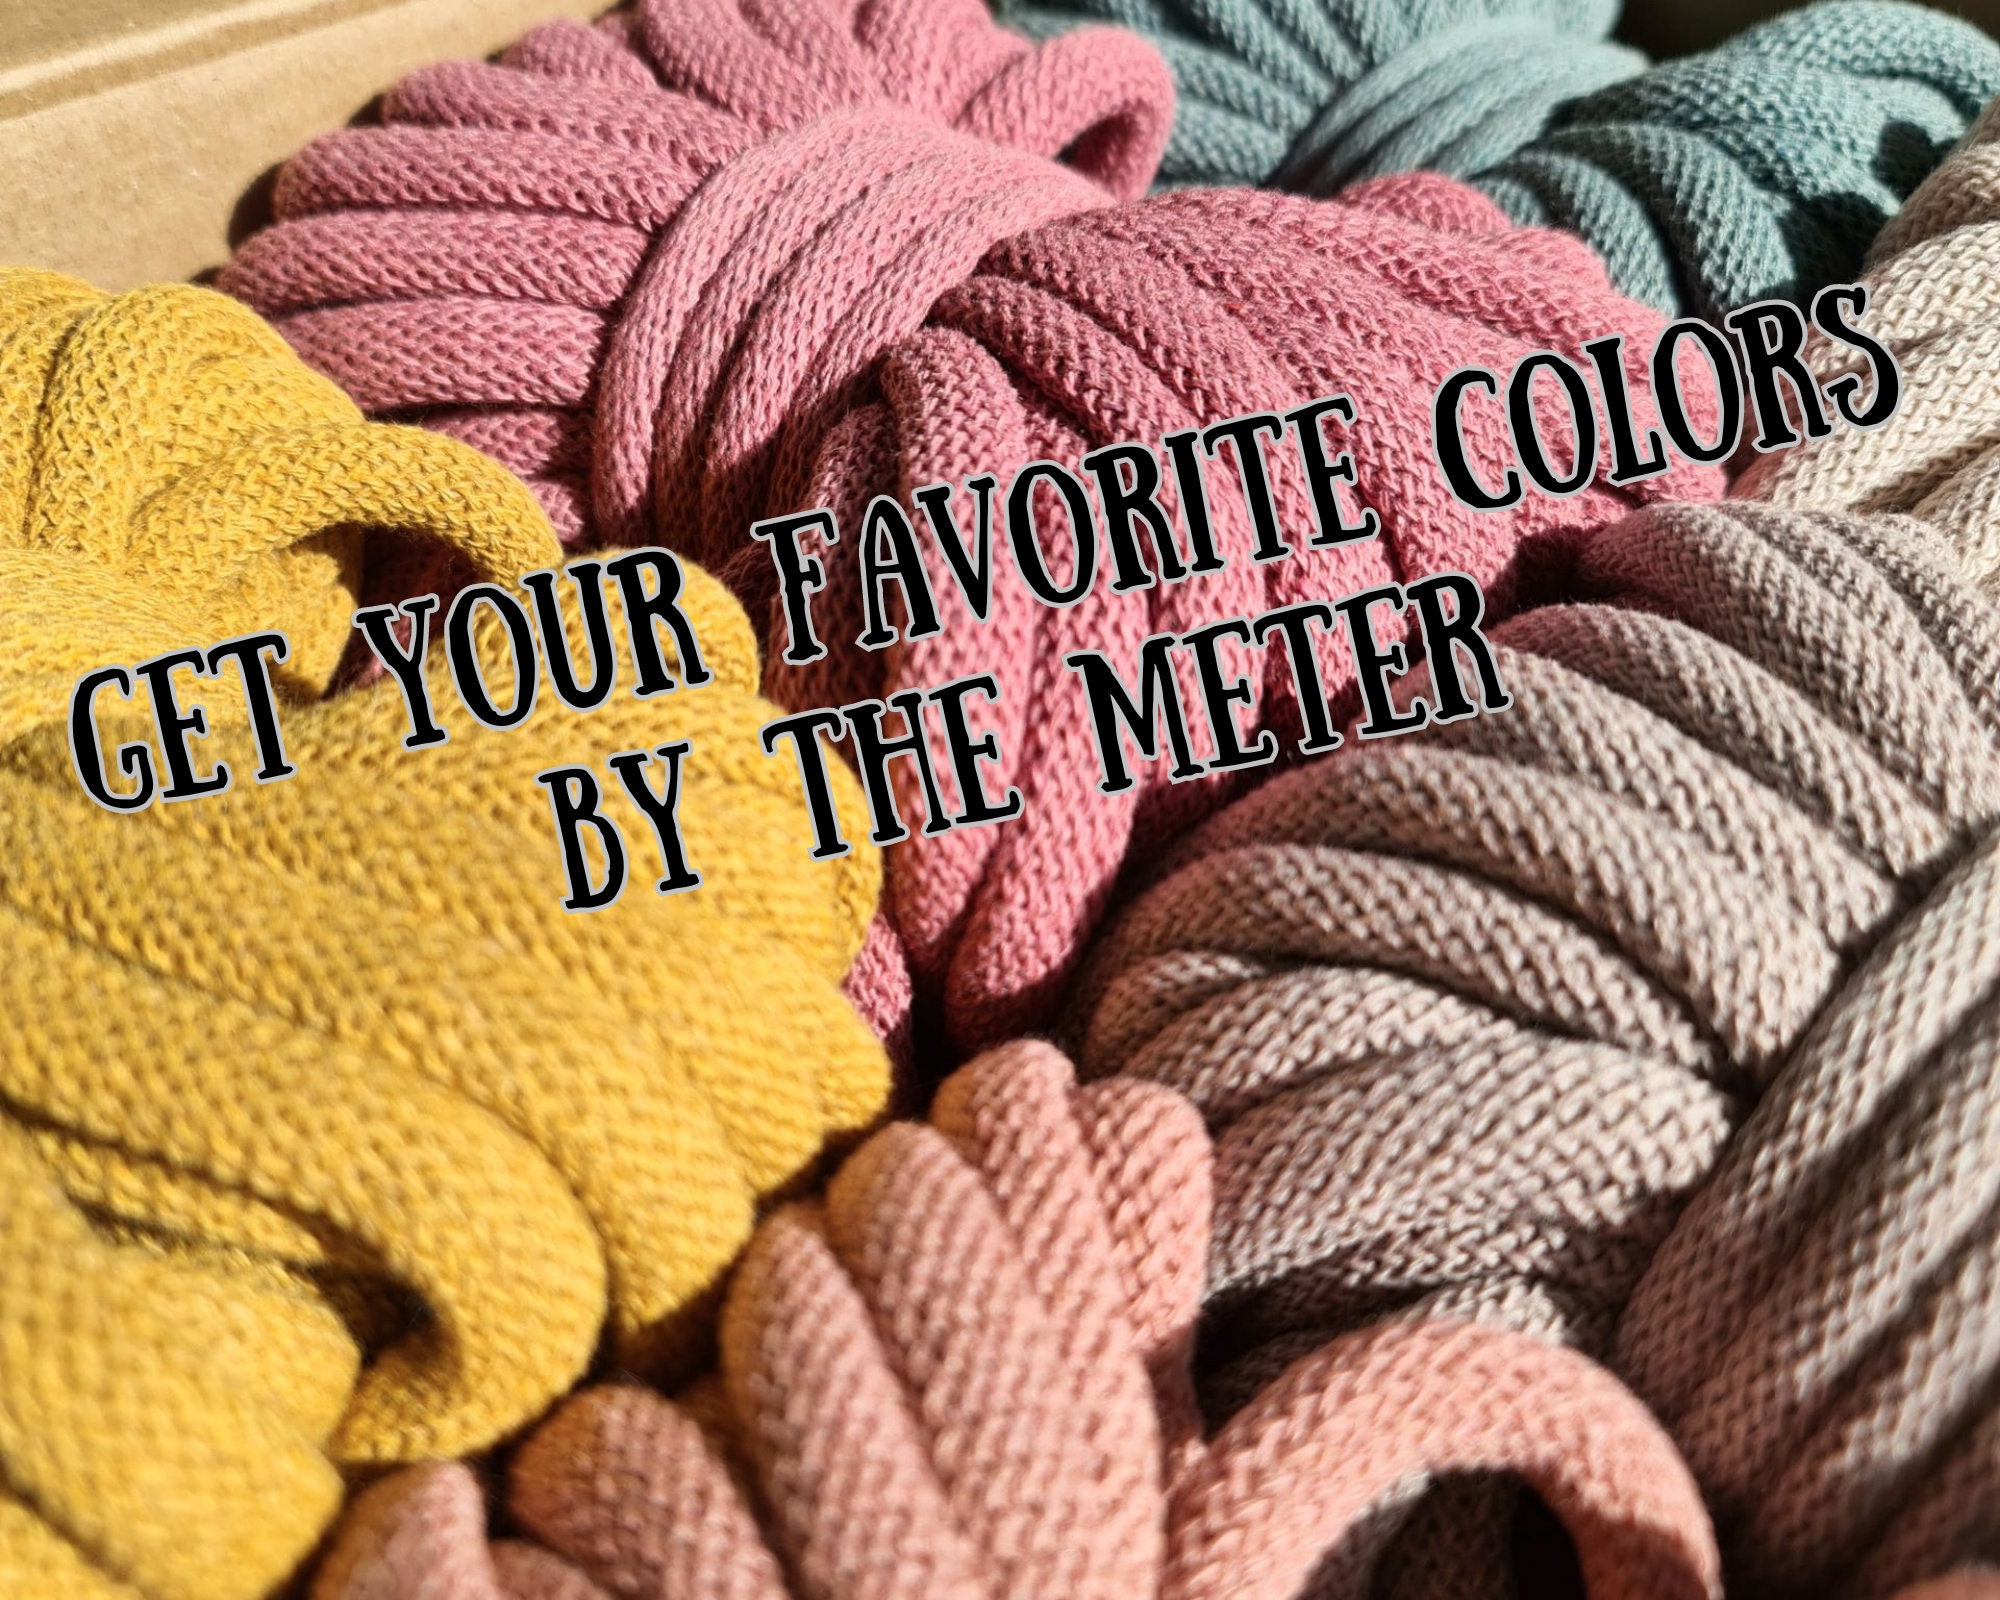 Various Colours: Brazilian Wool Hair, Faux Locks, Braids, Twists, Knitting  Brazil Wool. Yarn 